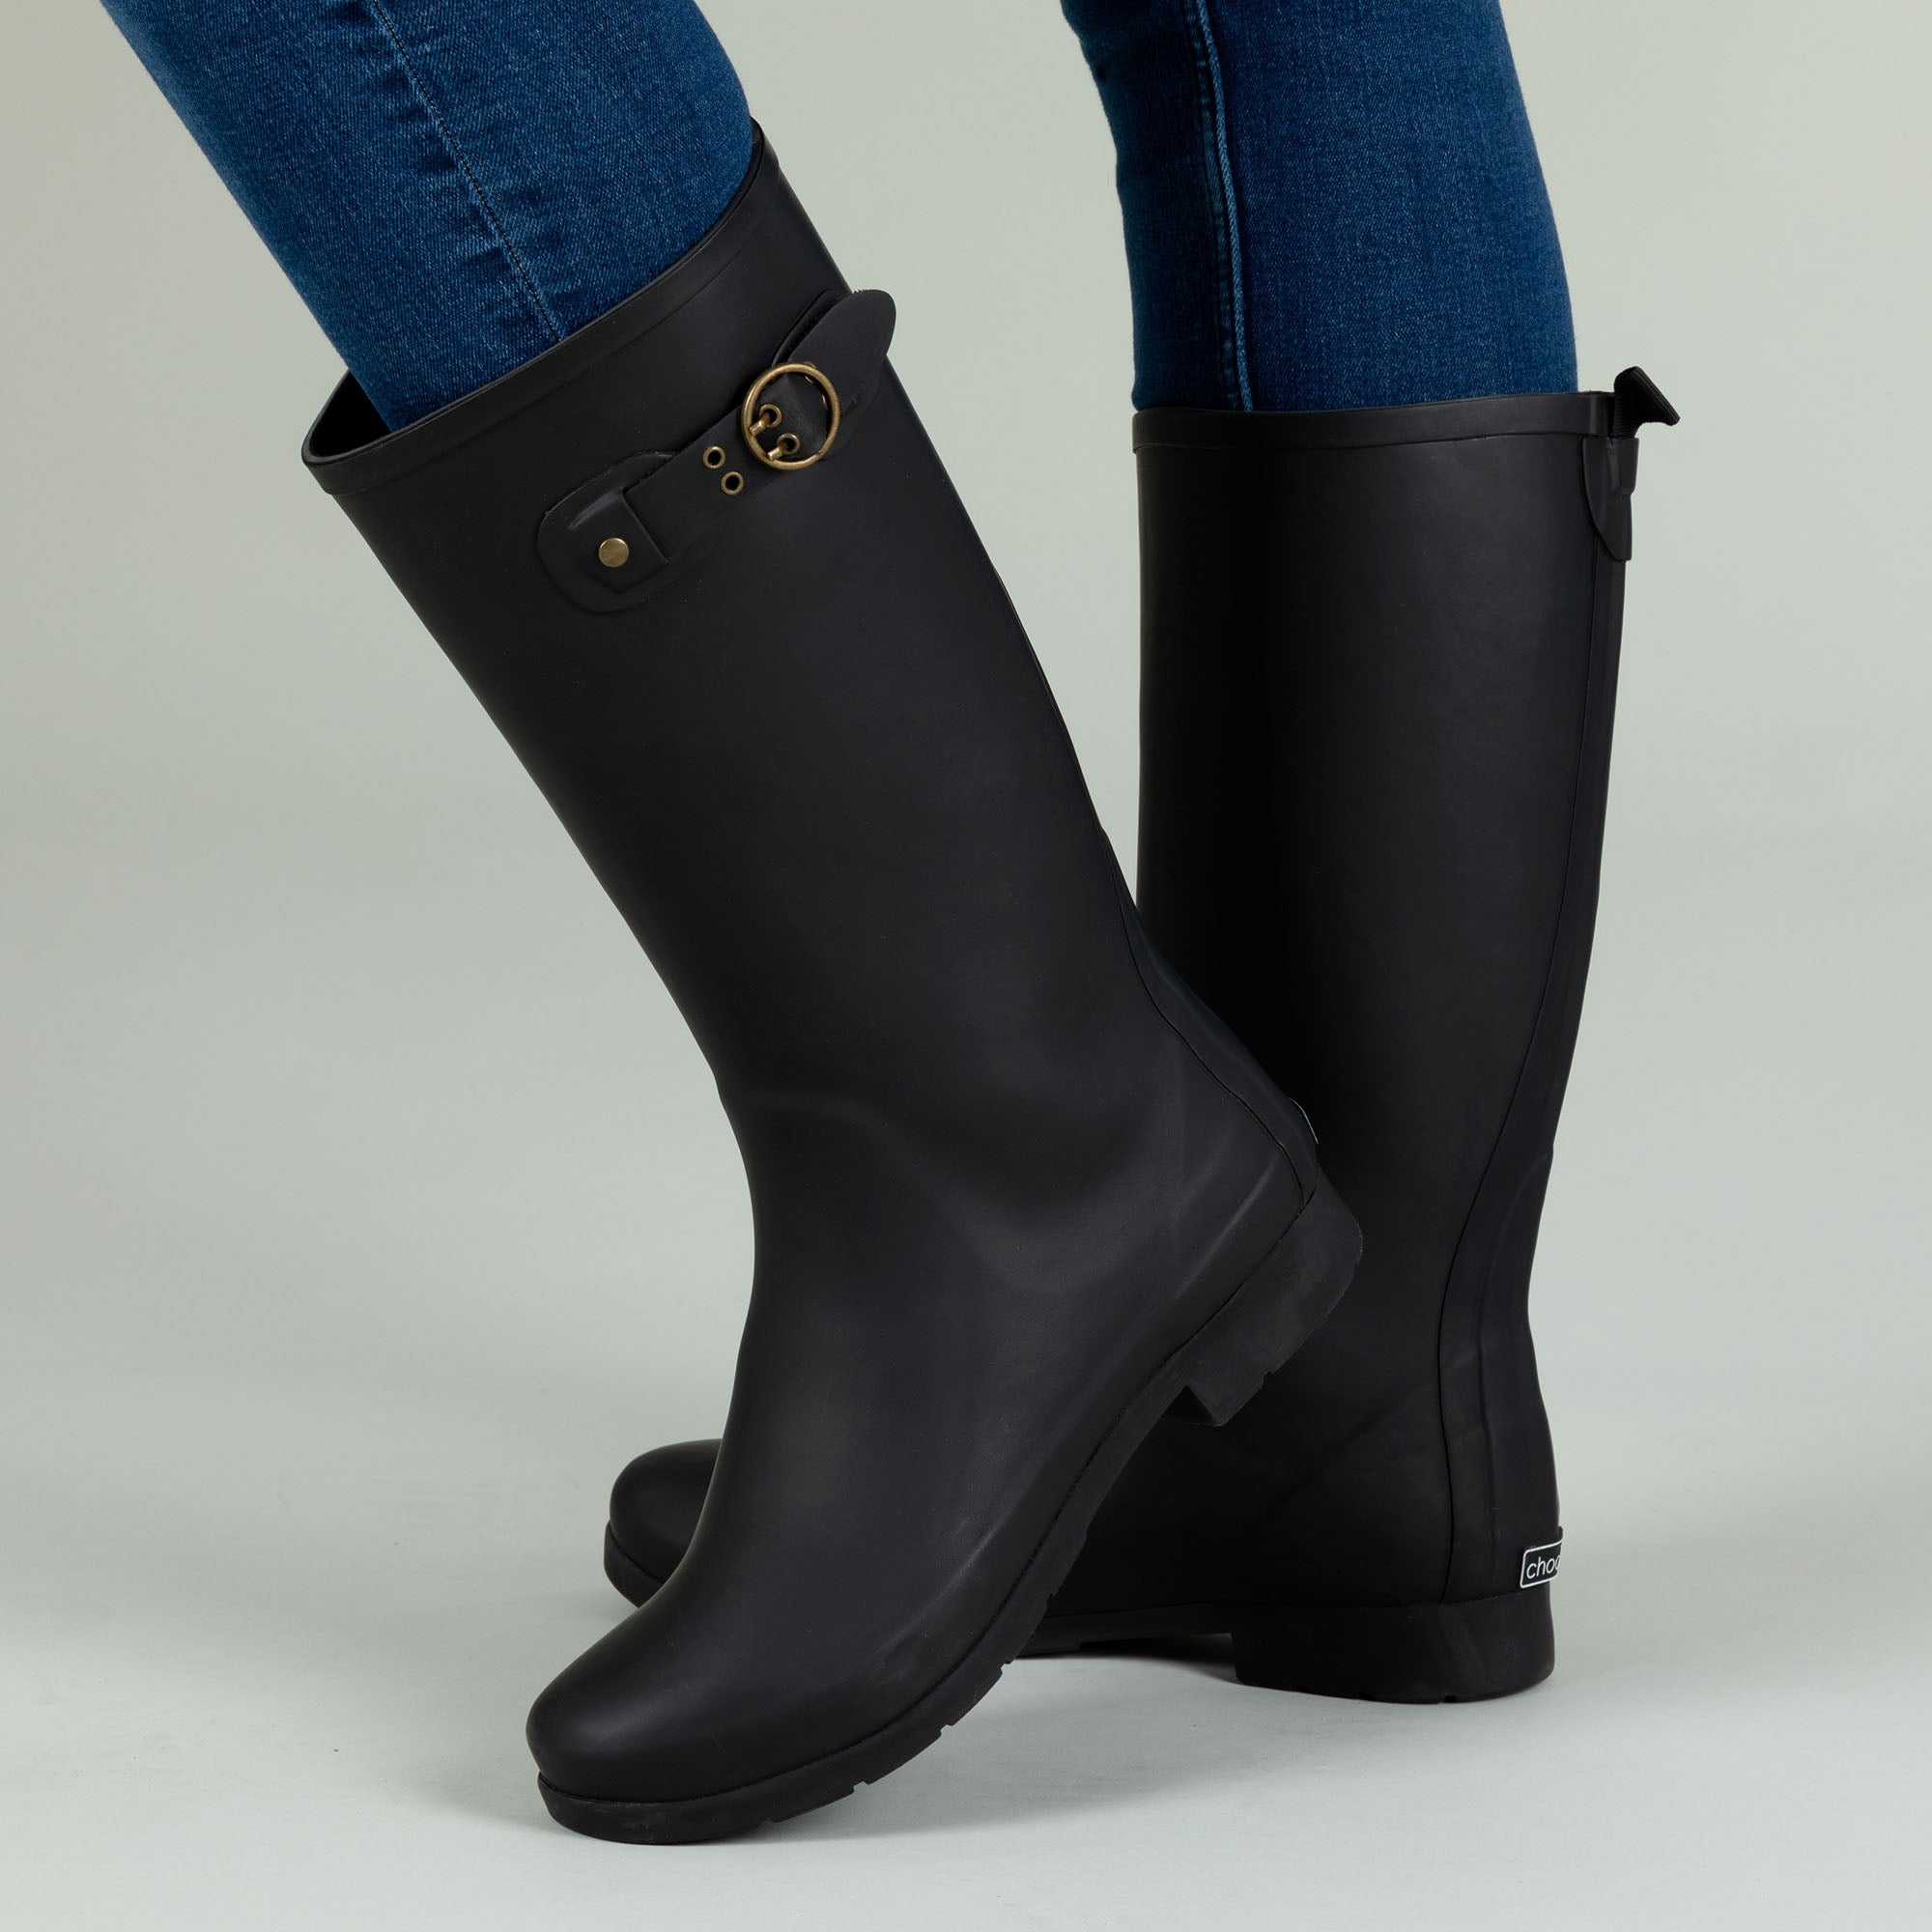 Eastlake Classic Tall Rain Boots - Black - 10